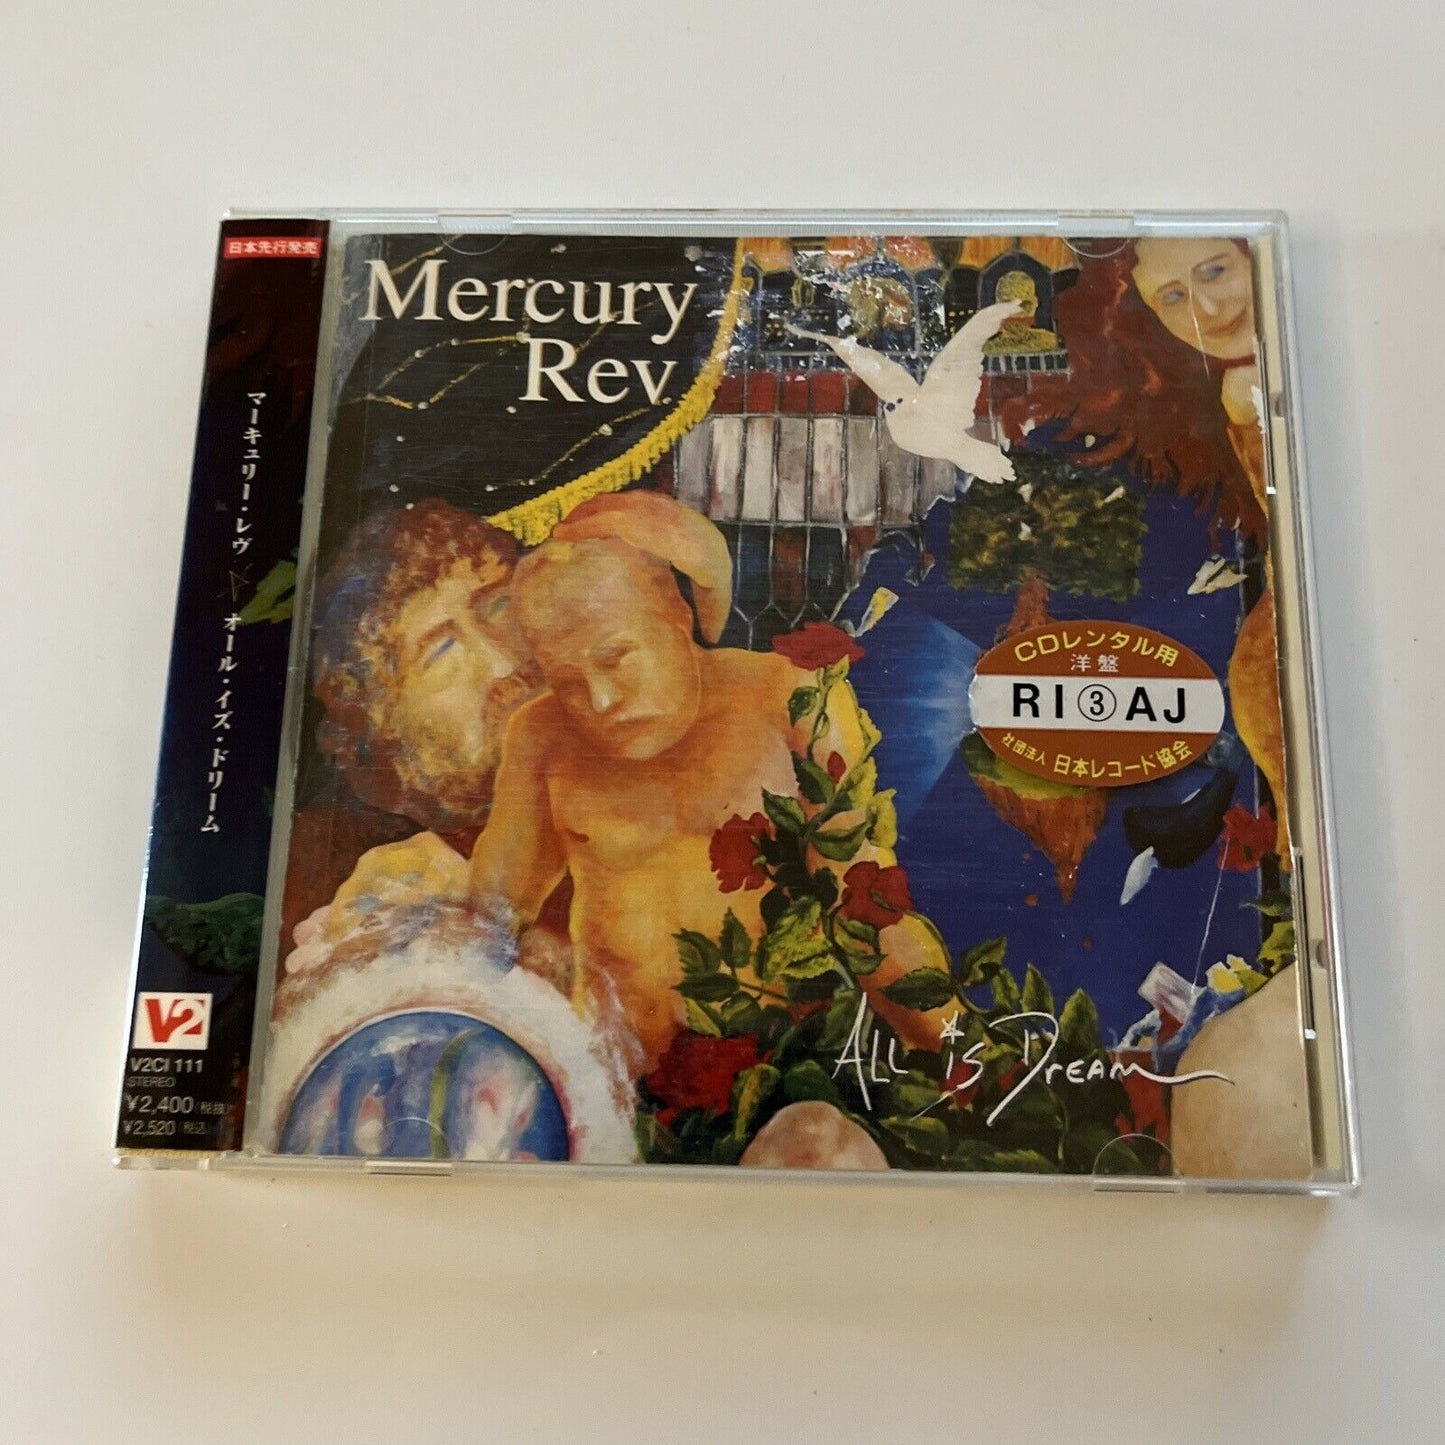 Mercury Rev - All Is Dream (CD, 2001) Obi Japan V2ci-111